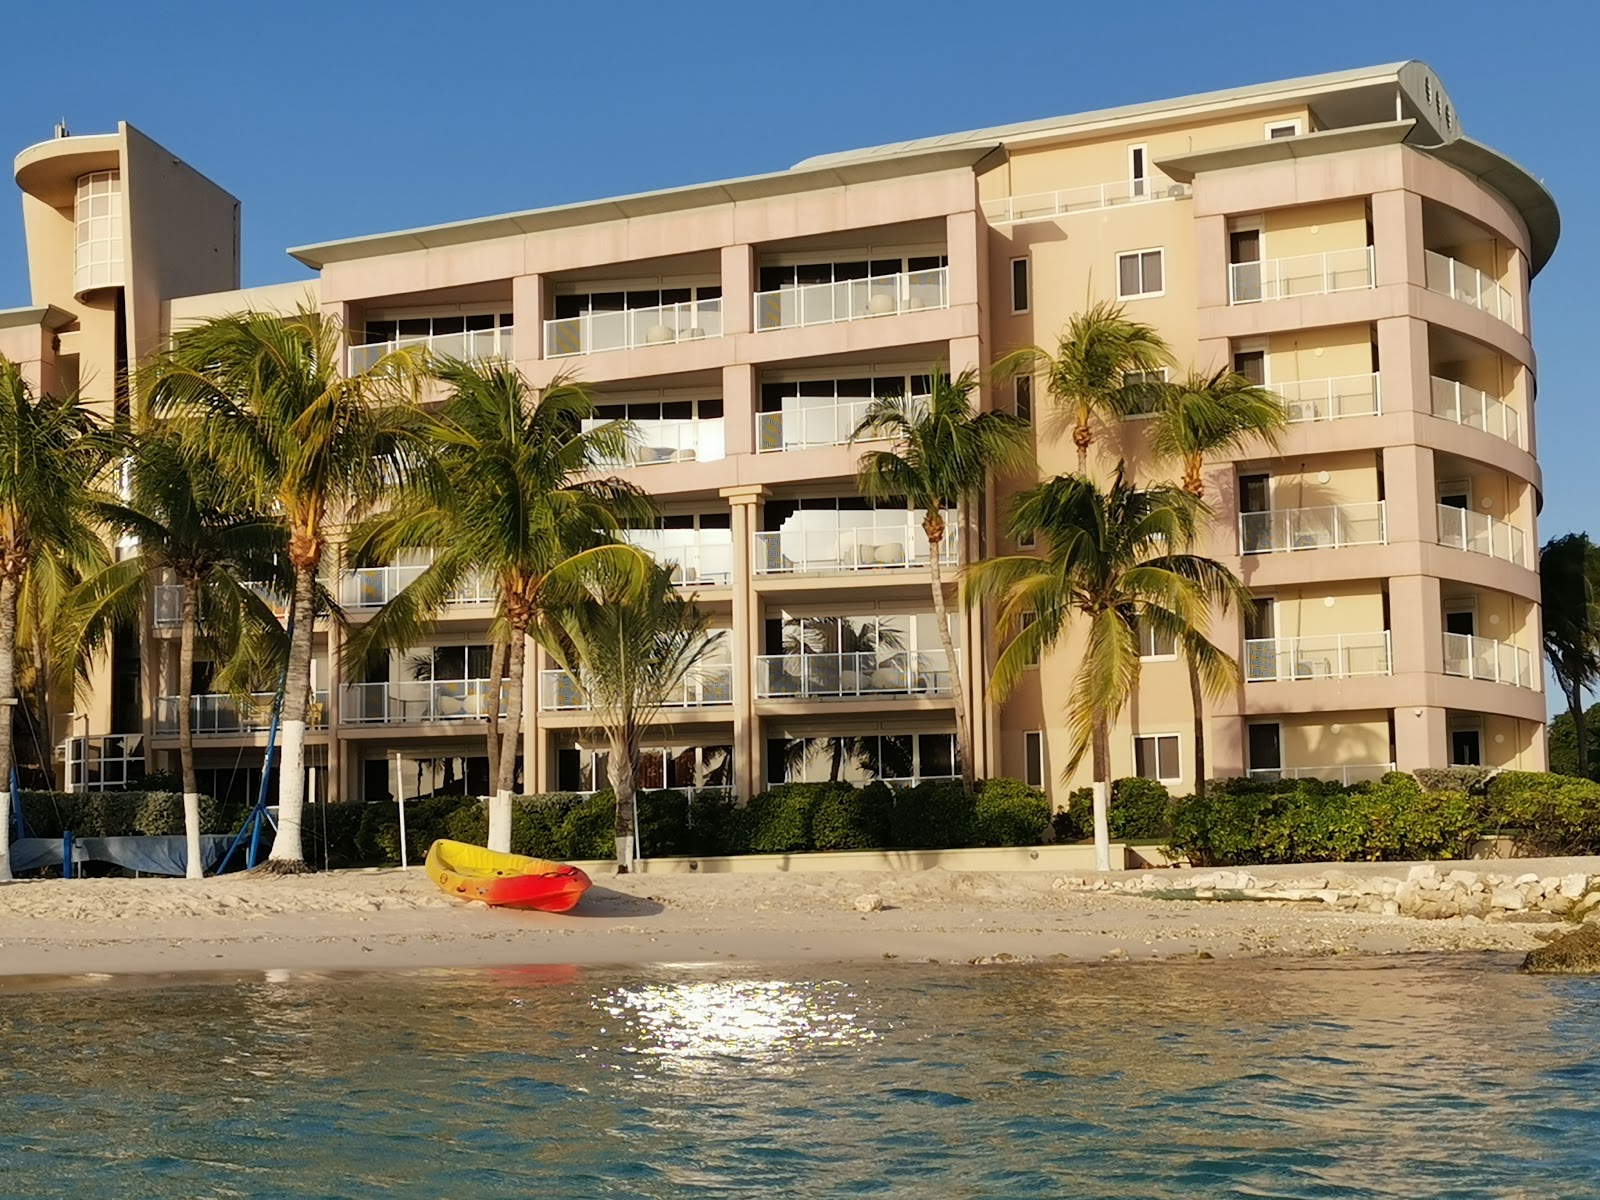 Photo of Sunscape Curacao beach resort area